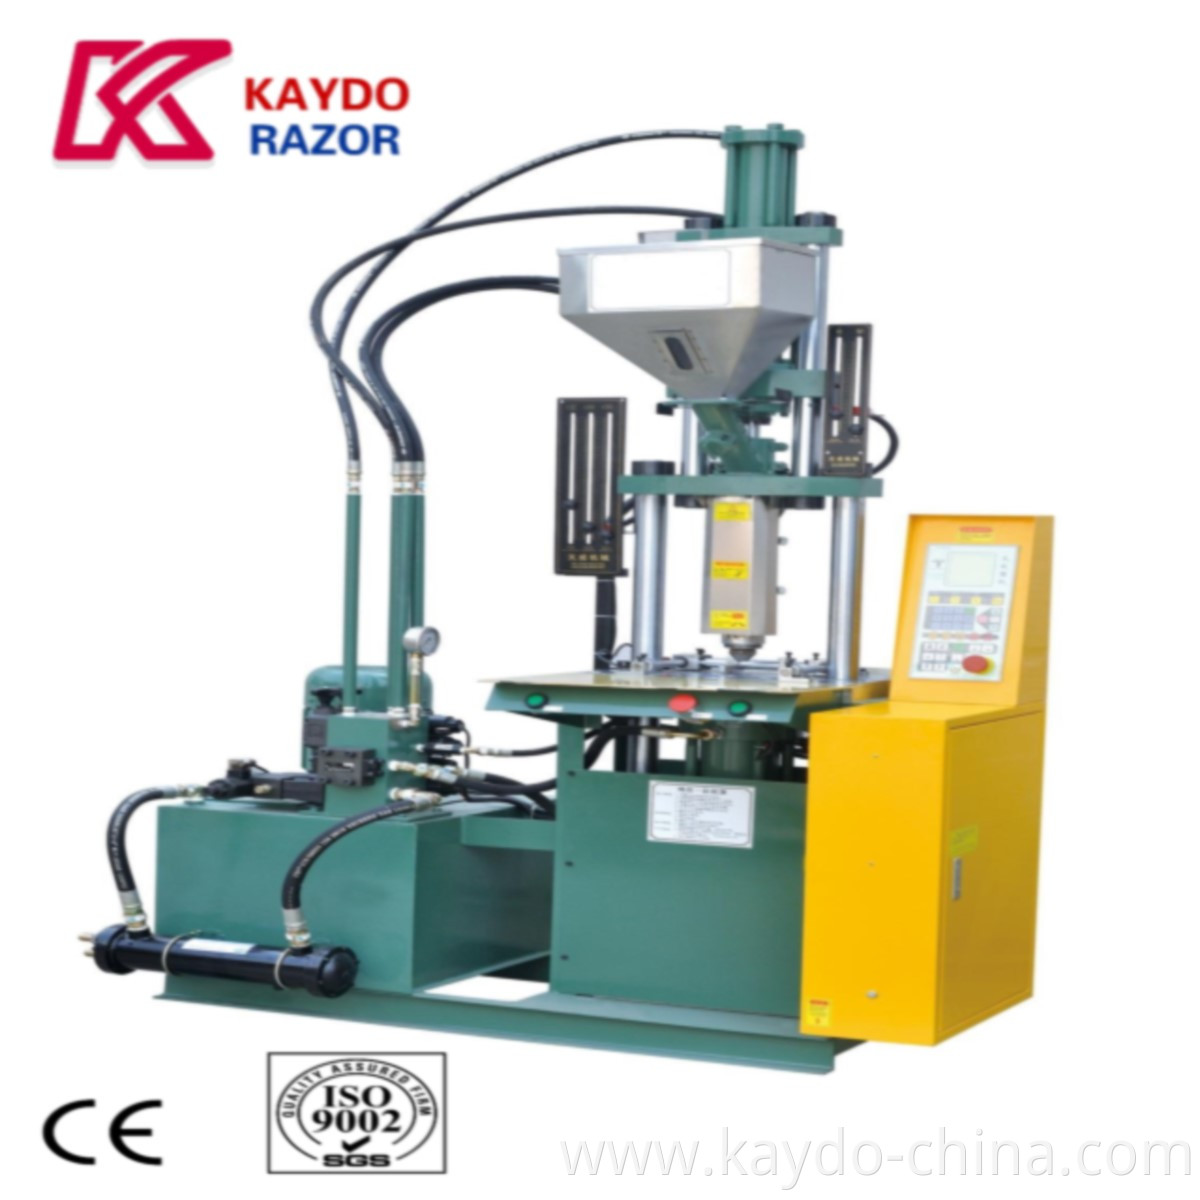 Kaydo 2018 best selling low price plastic razor injection molding machine